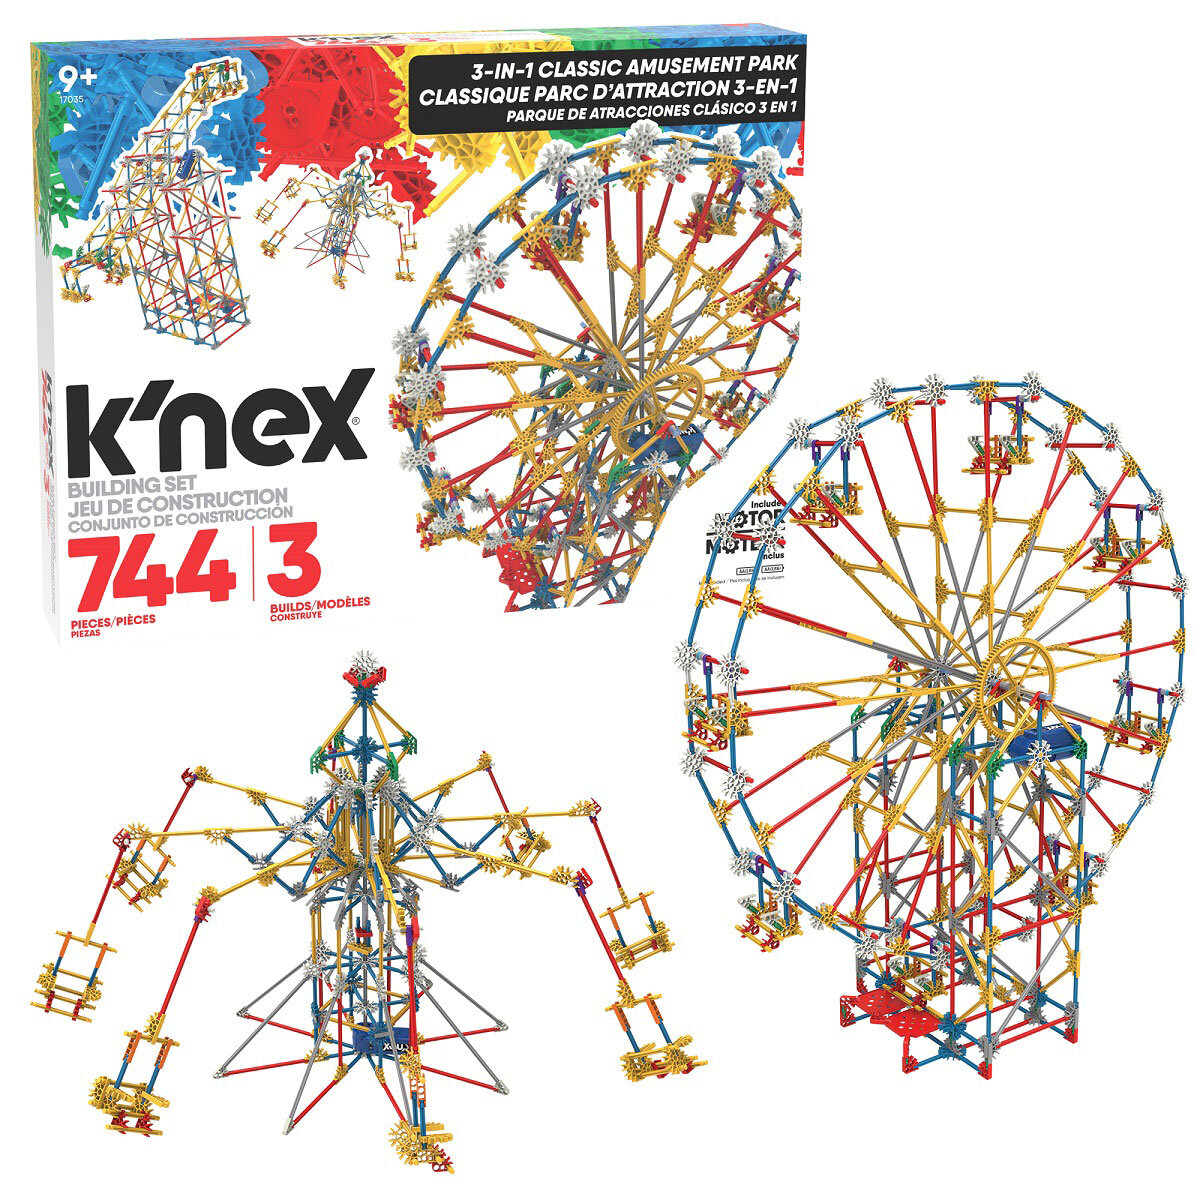 Buy K'nex 3 in 1 Classic Amusement Park Set Box & item Image at Costco.co.uk